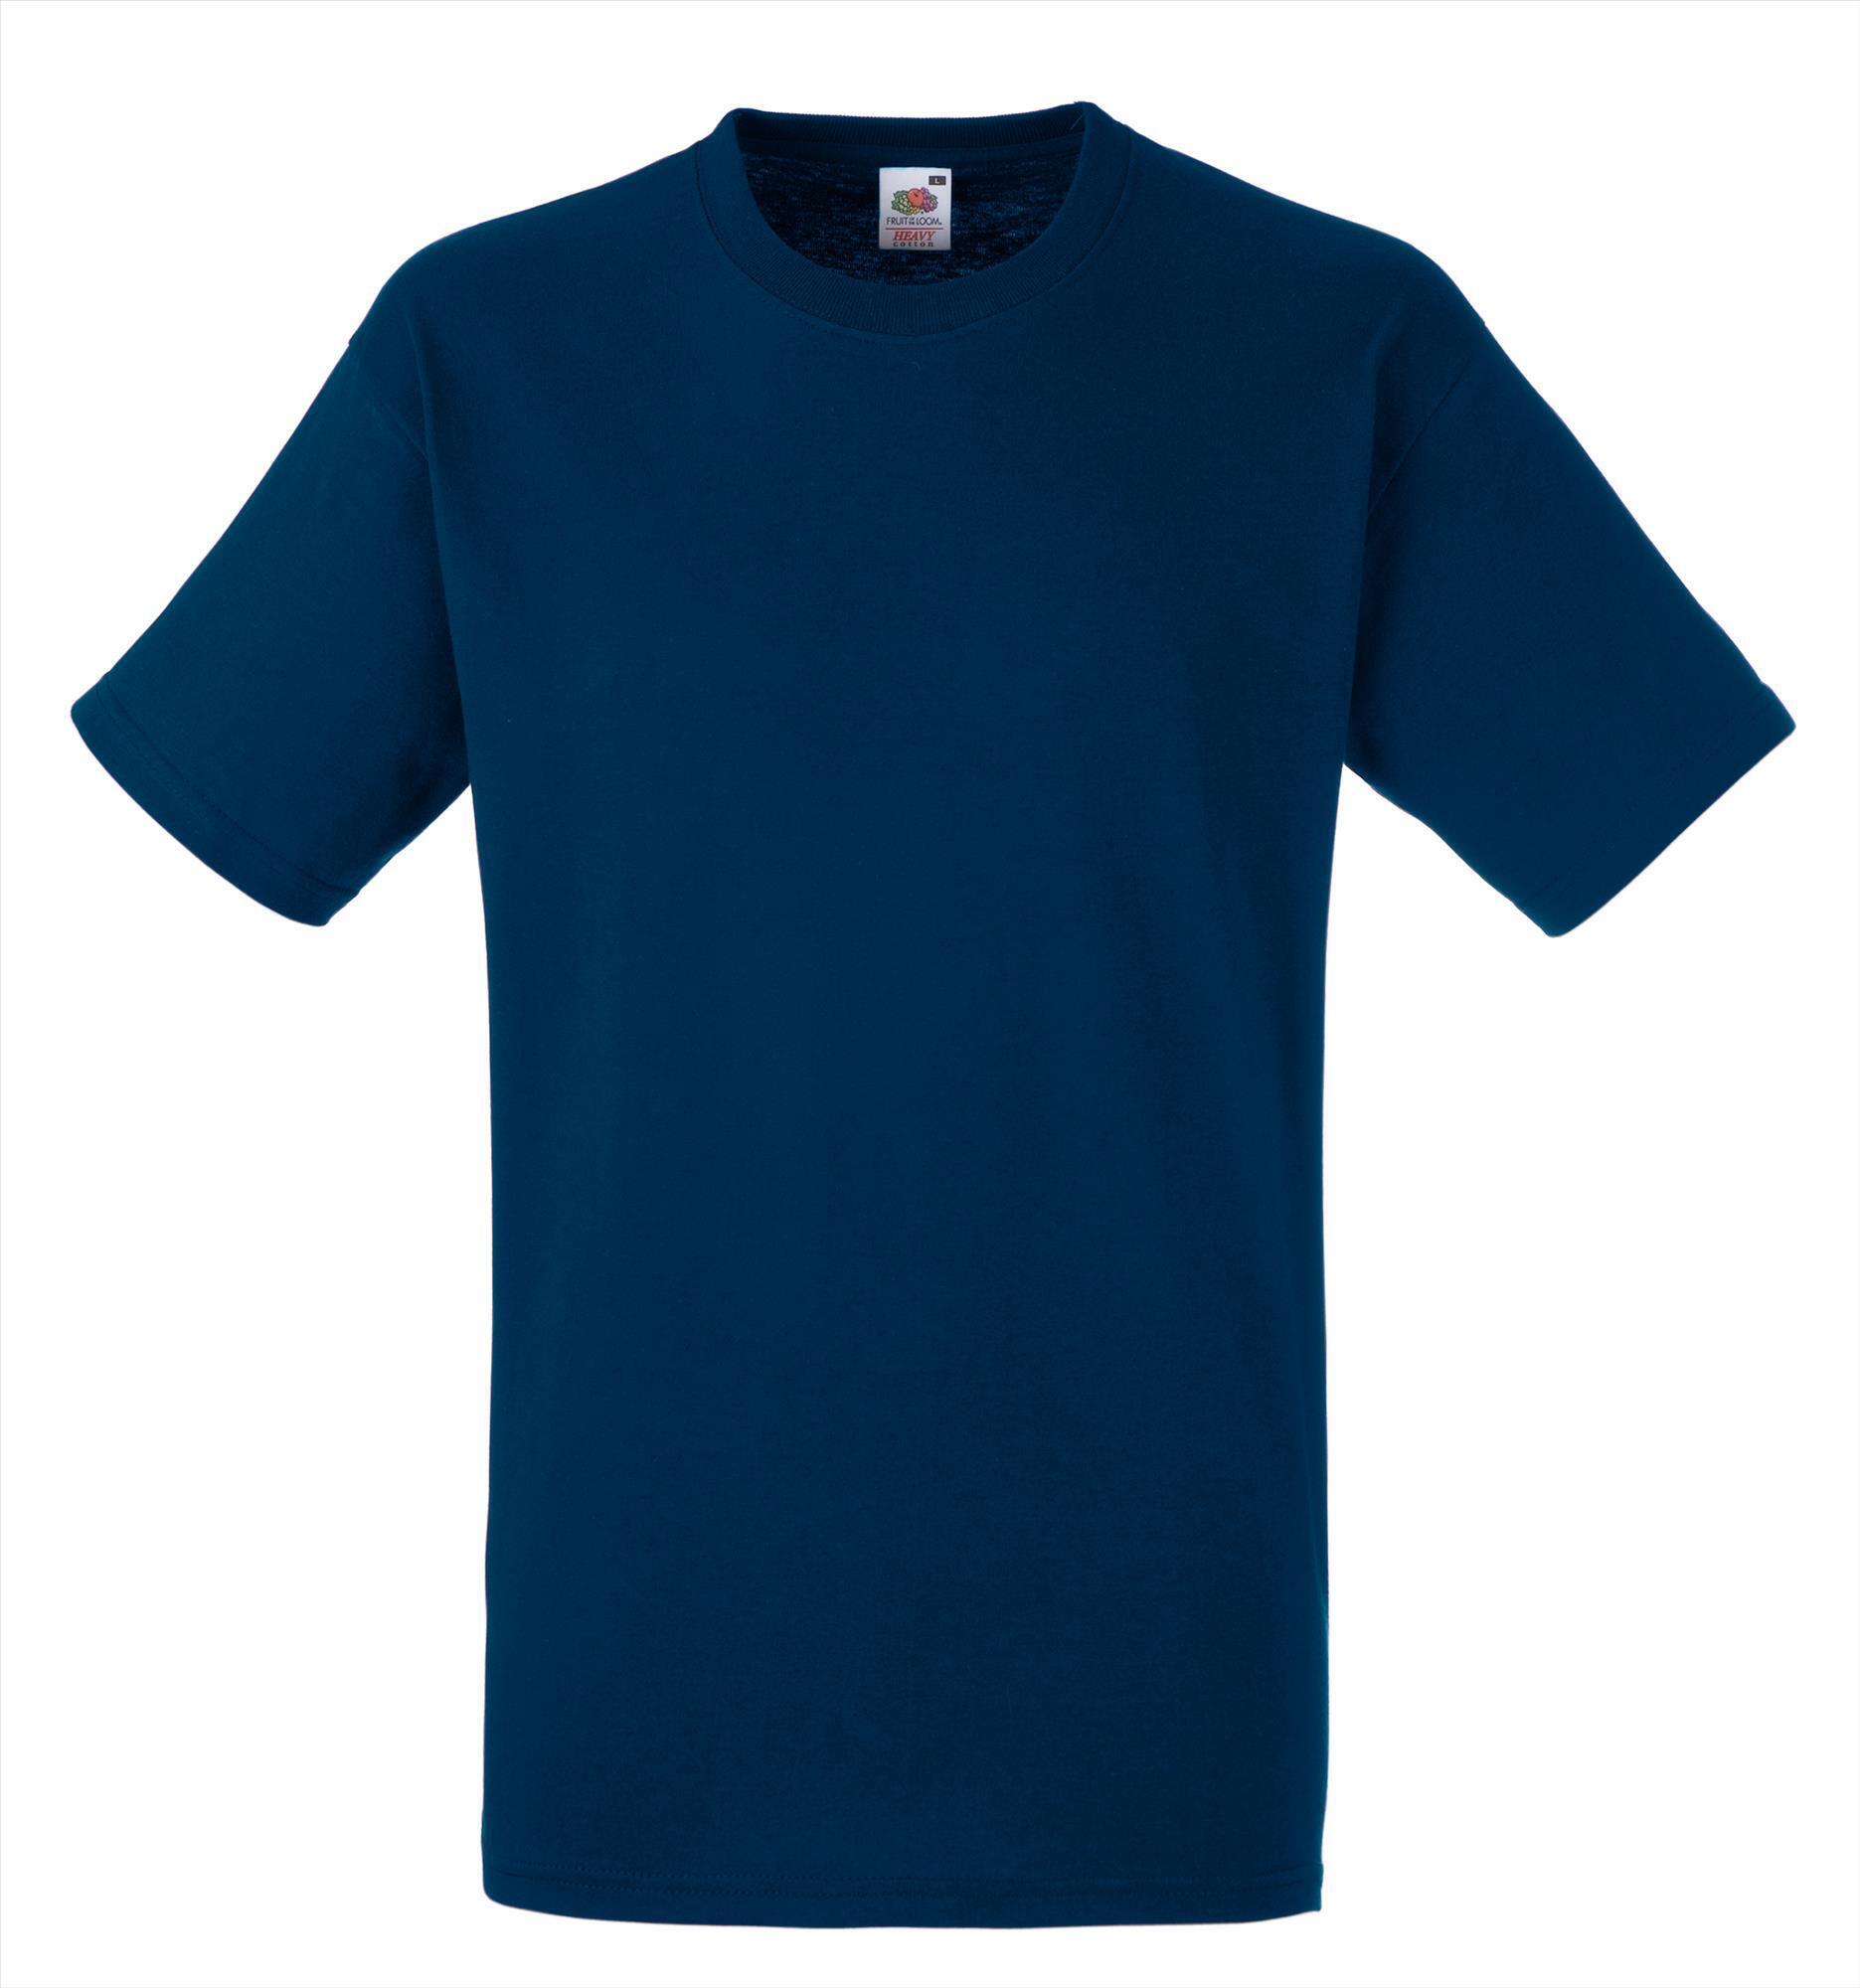 T-shirt unisex donkerblauw lekker dik personaliseren je eigen opdruk prima werk T-shirt